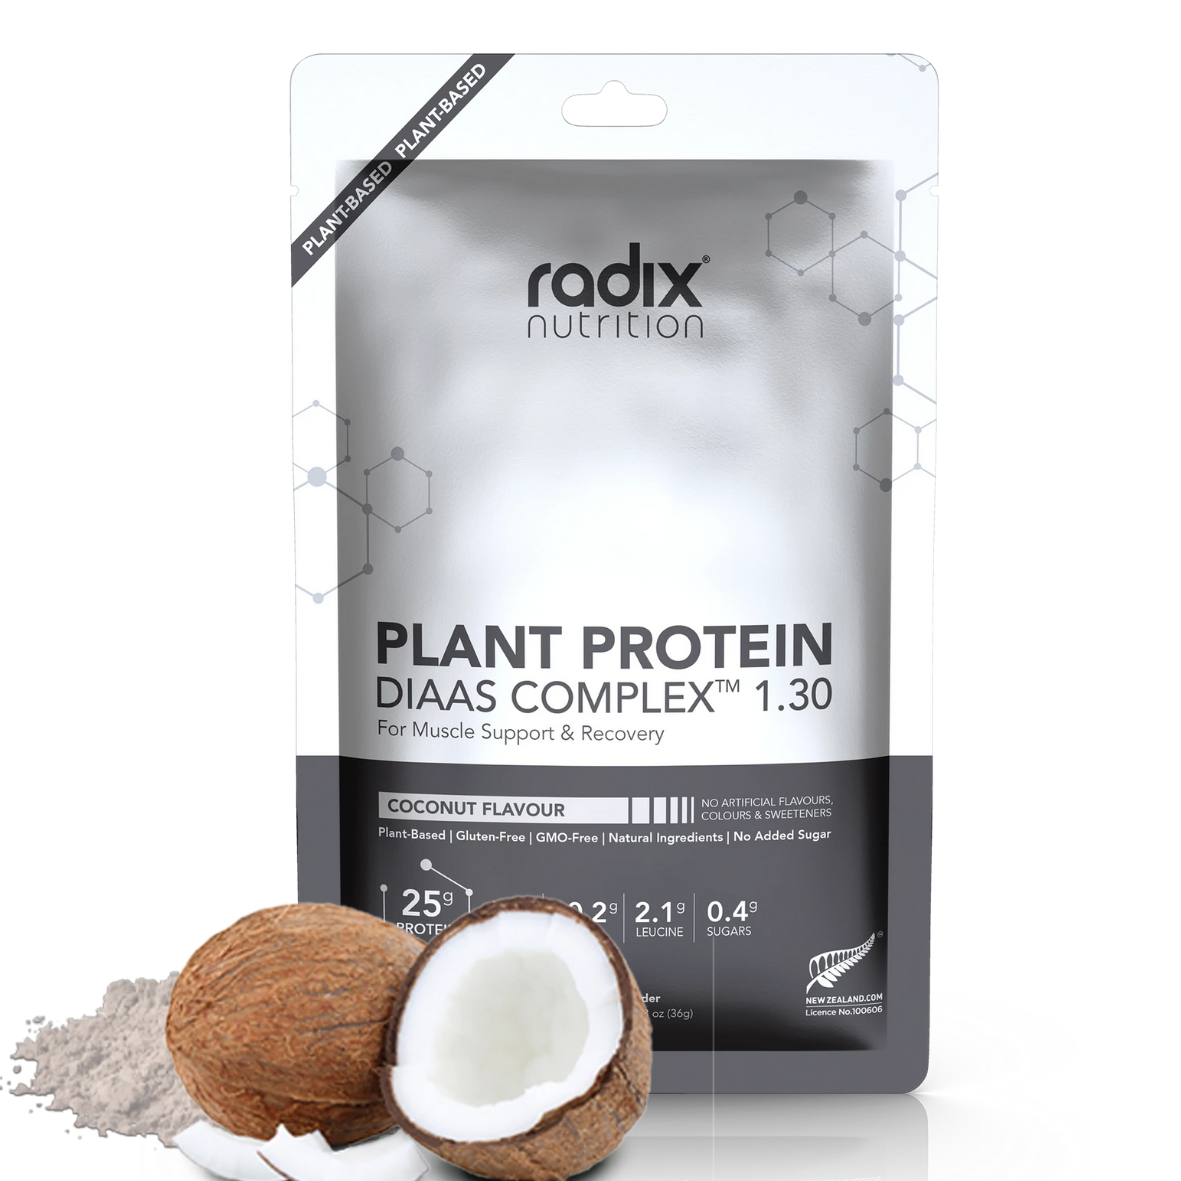 Radix Nutrition - Plant Protein DIAAS Complex™ 1.30 - Coconut